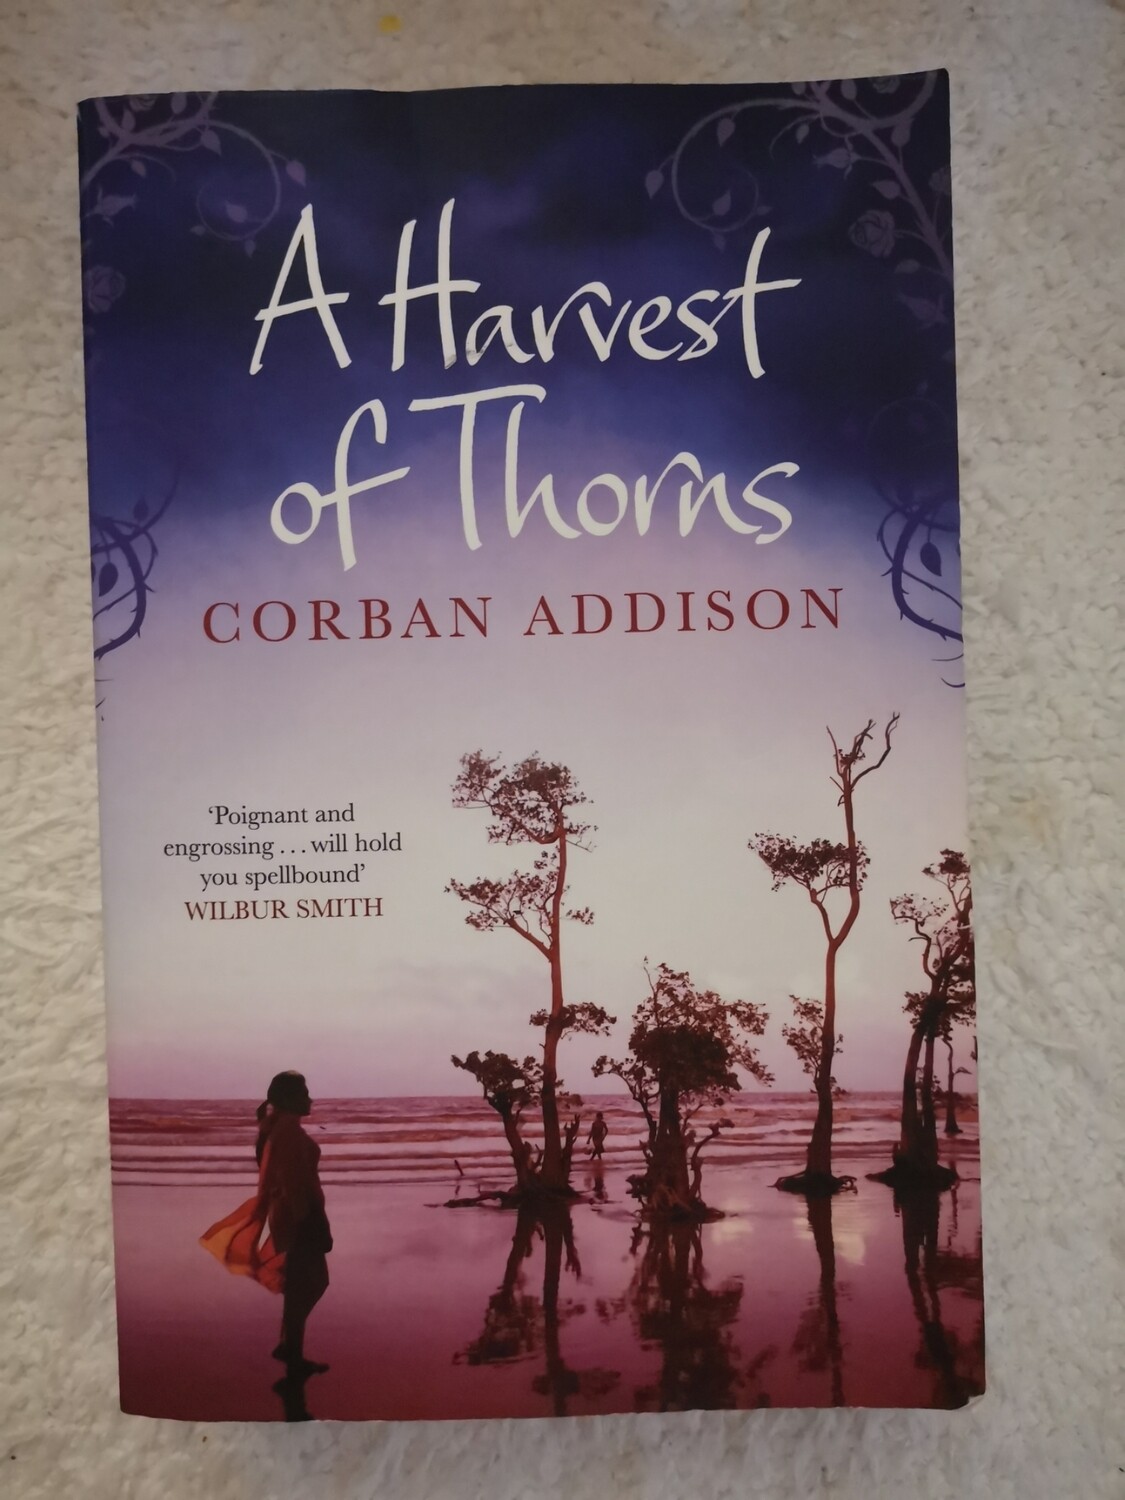 A Harvest of thorns, Corban Addison